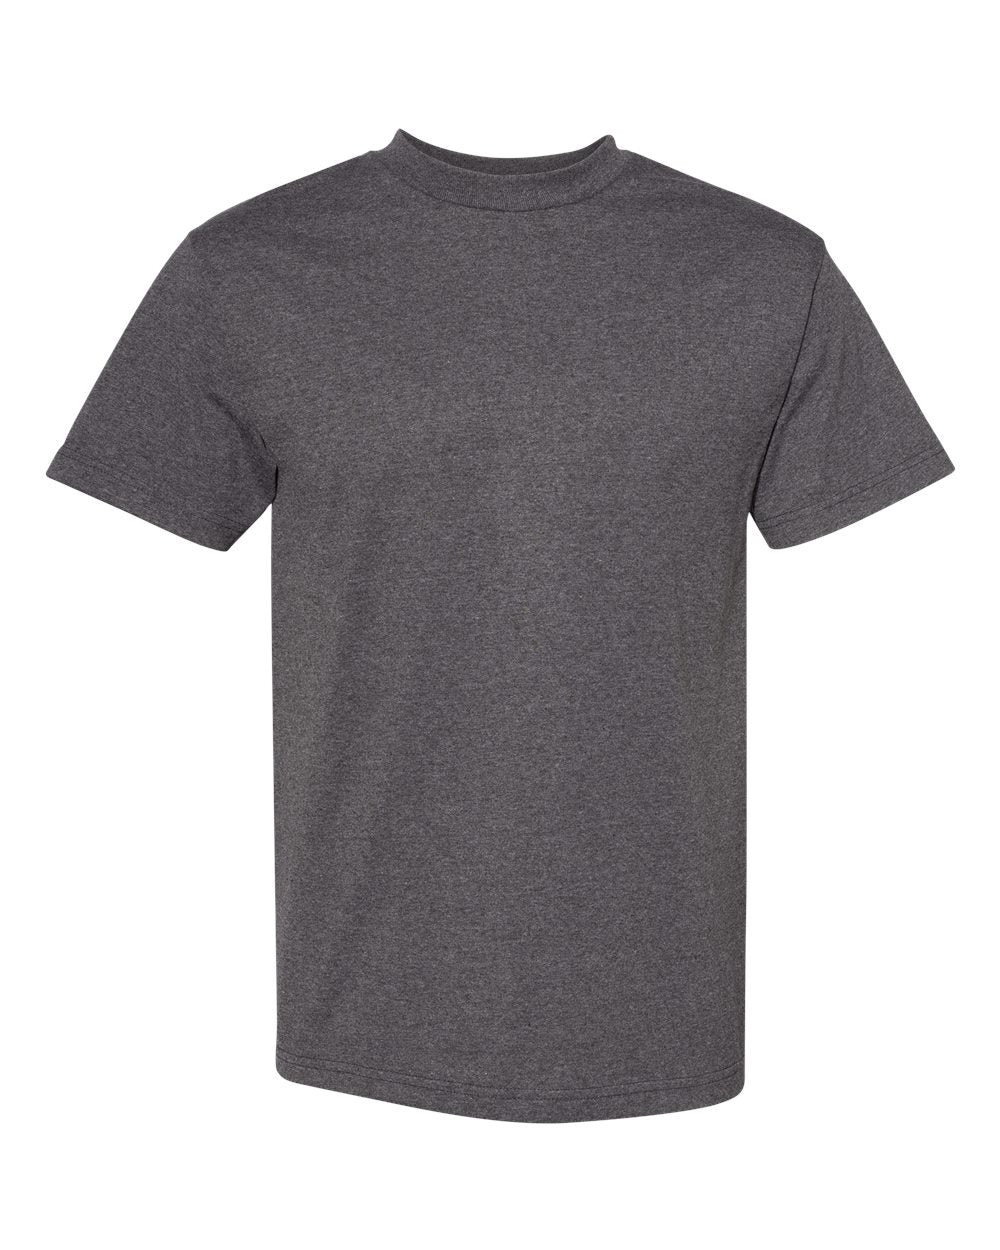 American Apparel 1304 Unisex Heavyweight Cotton Long Sleeve T-Shirt - T- shirt.ca